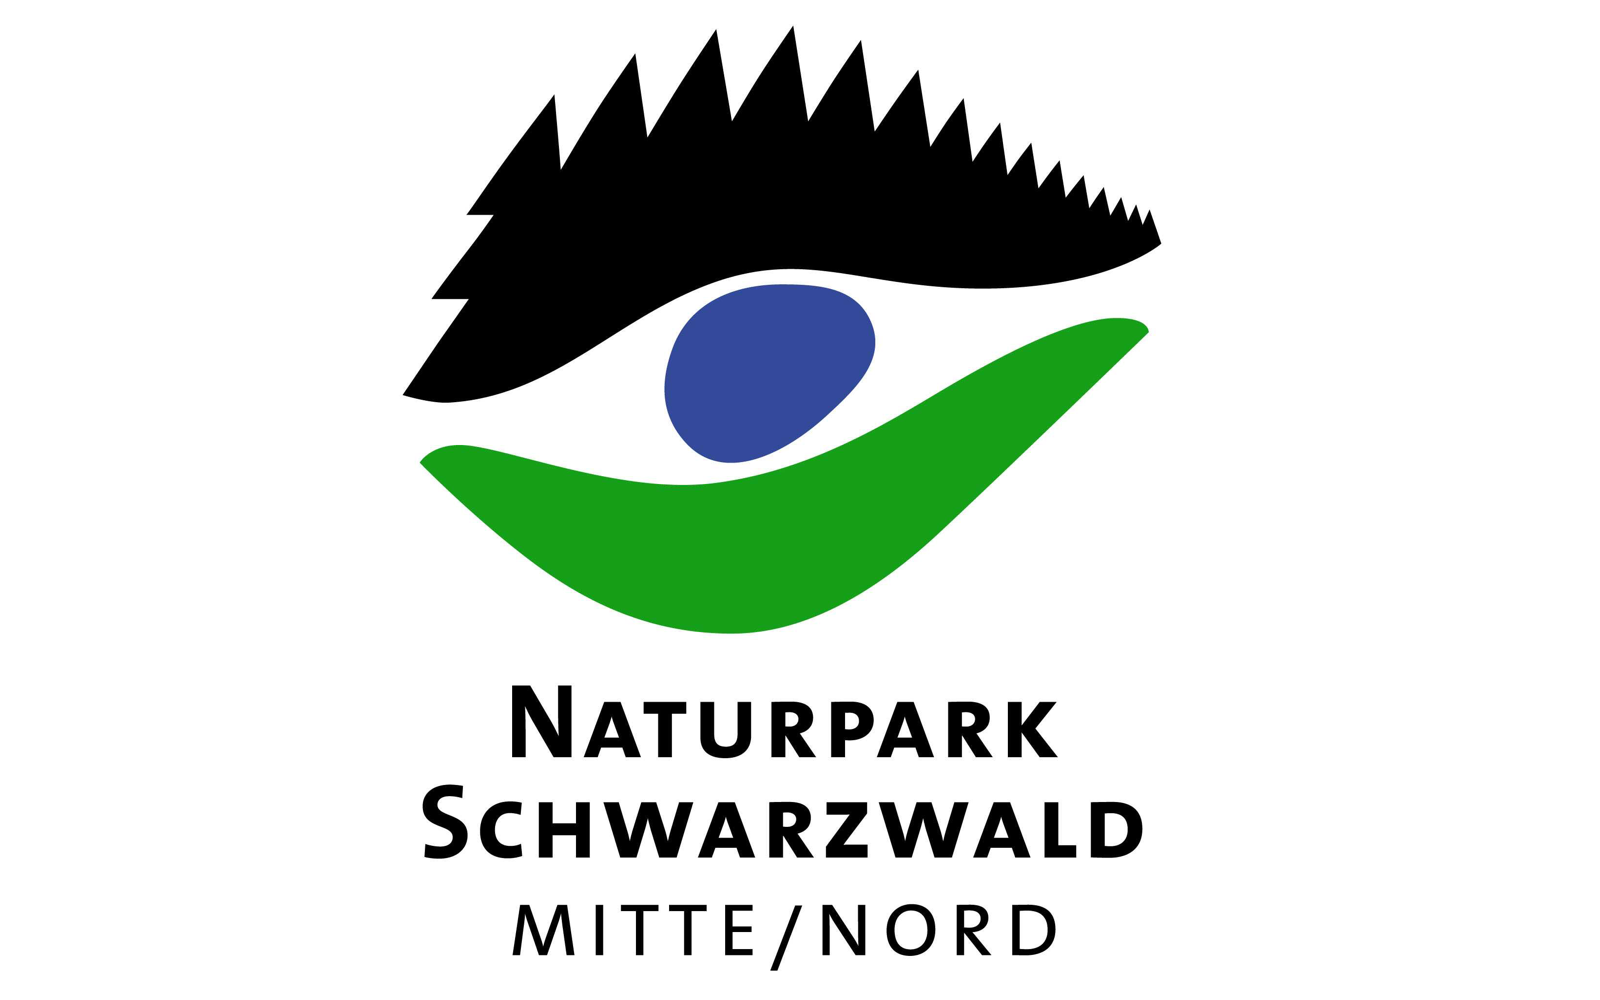 
    
            
                    Logo Naturpark Schwarzwald
                
        
